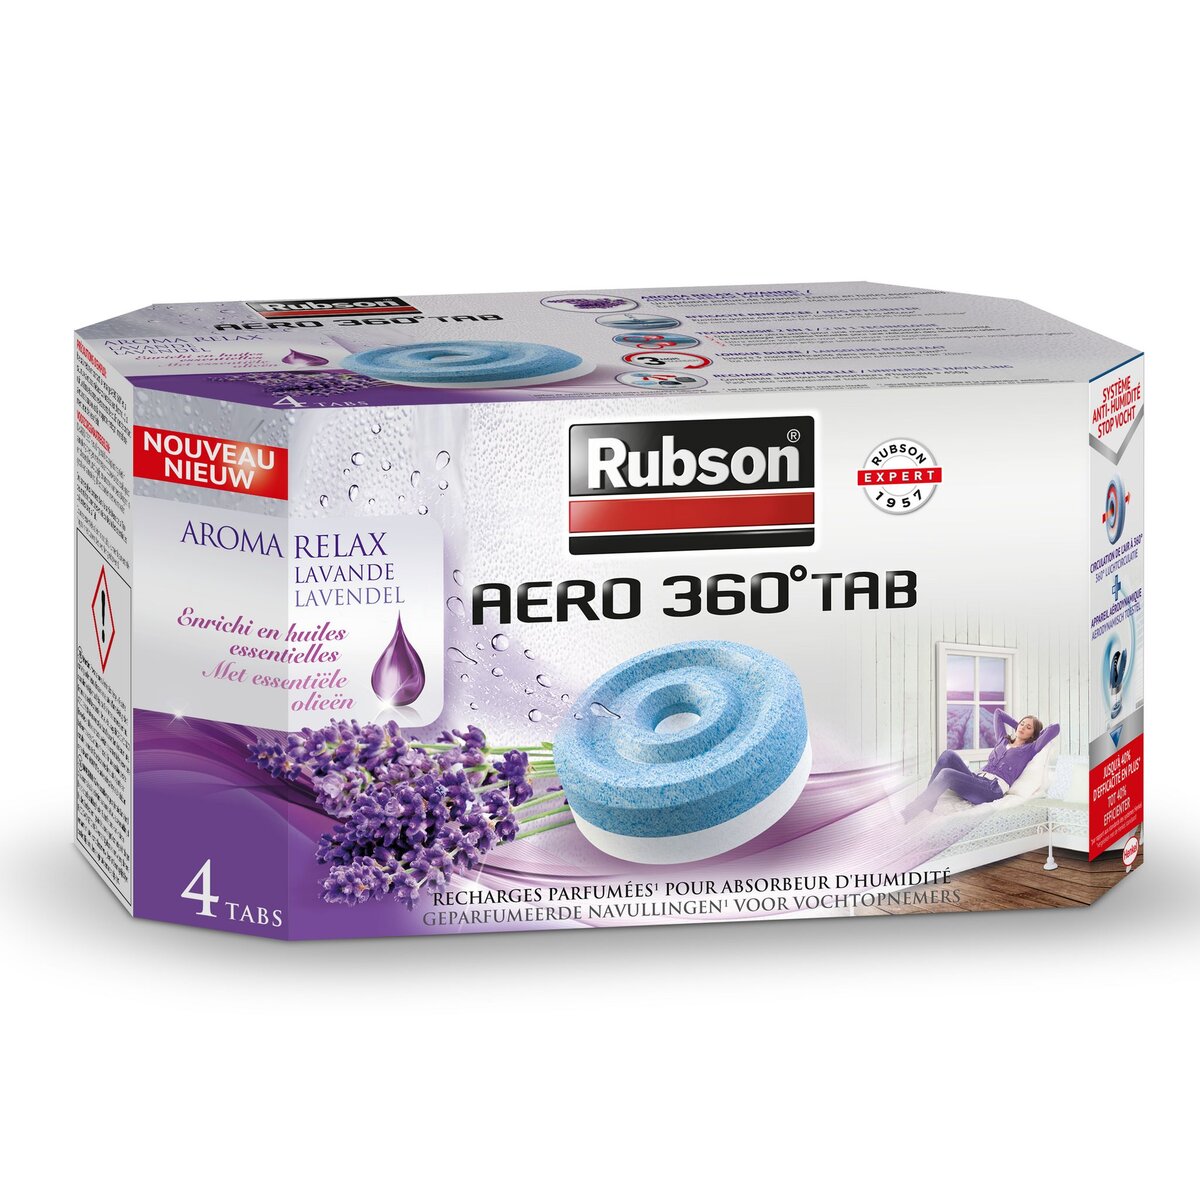 RUBSON Lot de 4 recharges AERO 360 Aroma relax lavande